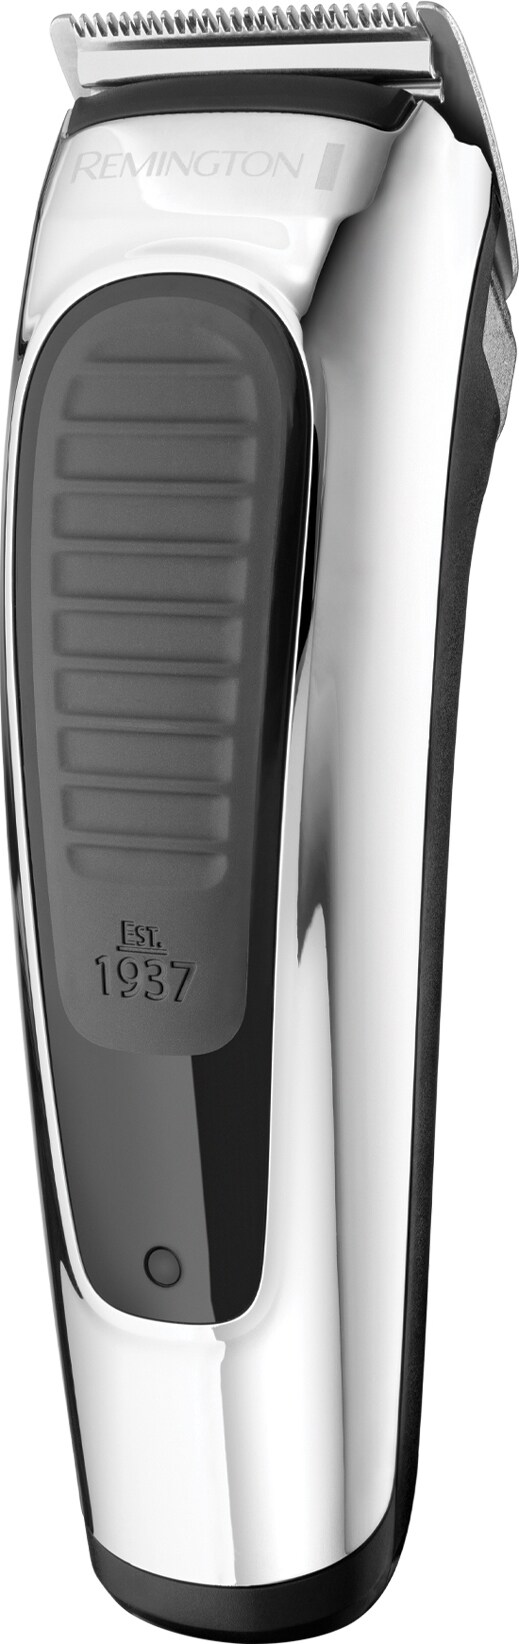 Remington Stylist hårtrimmer HC450 - Hårklippare - Elgiganten